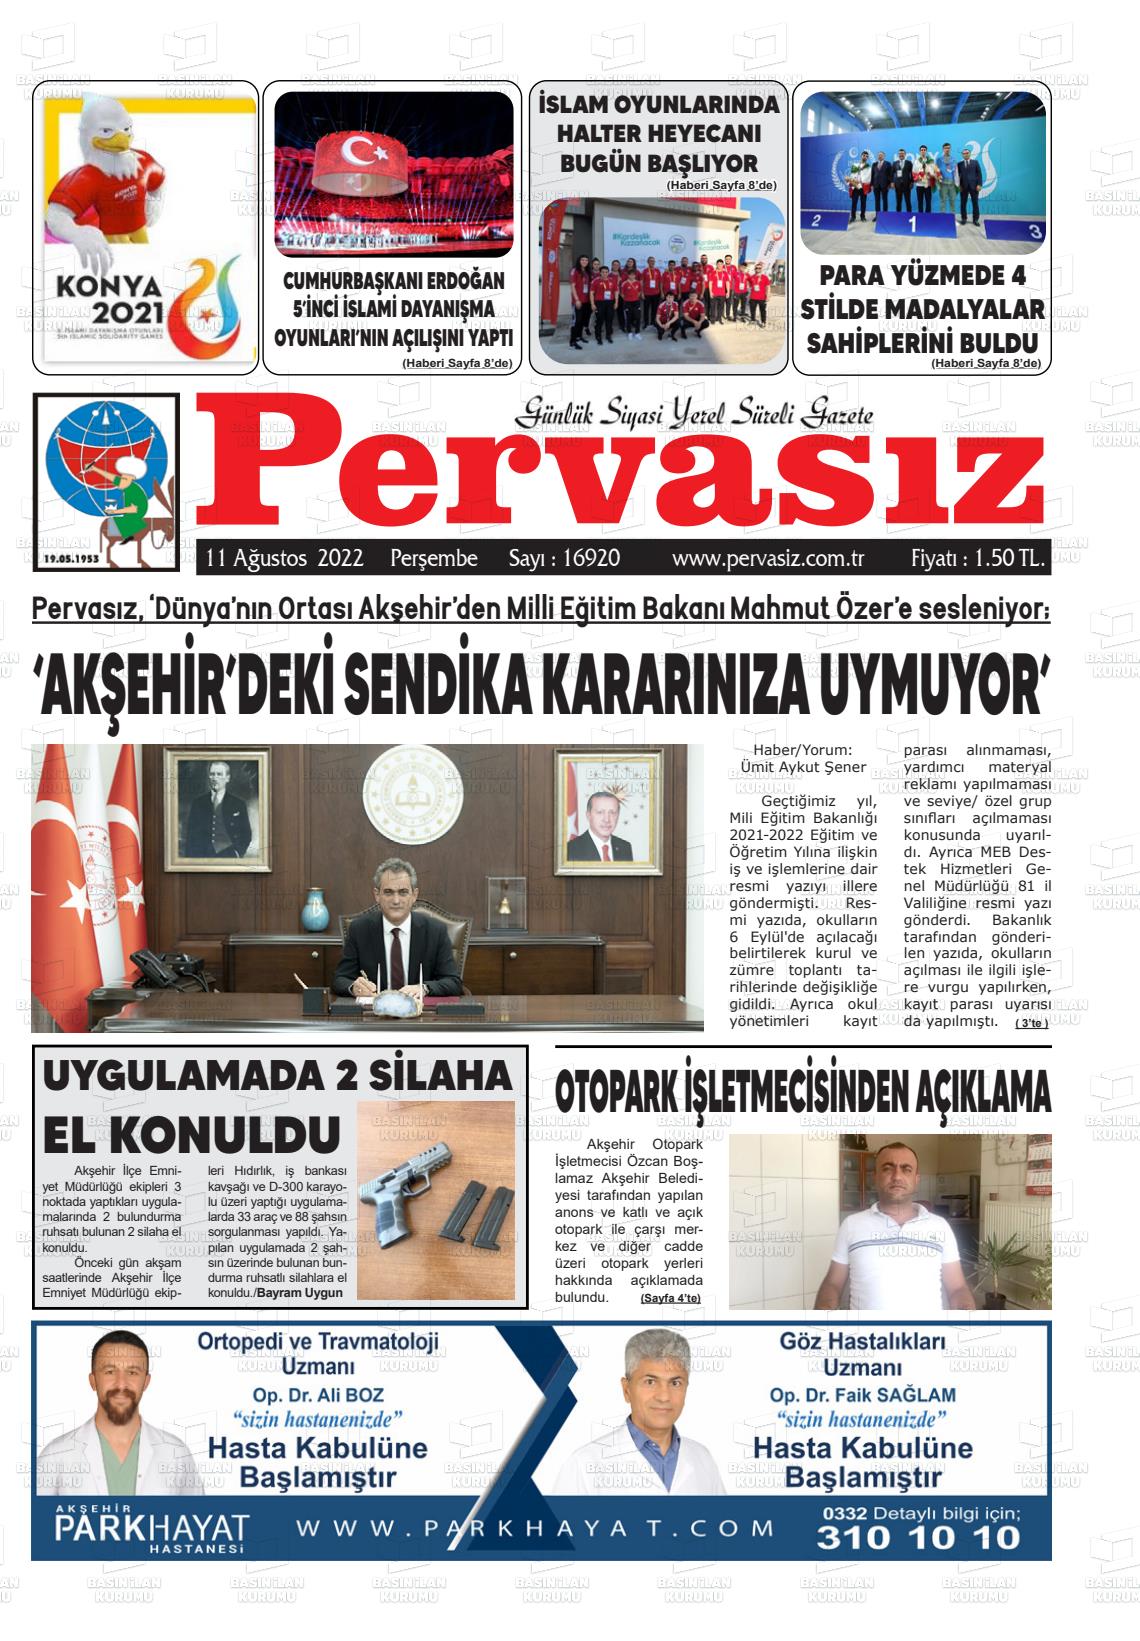 11 Ağustos 2022 Konya Pervasız Gazete Manşeti